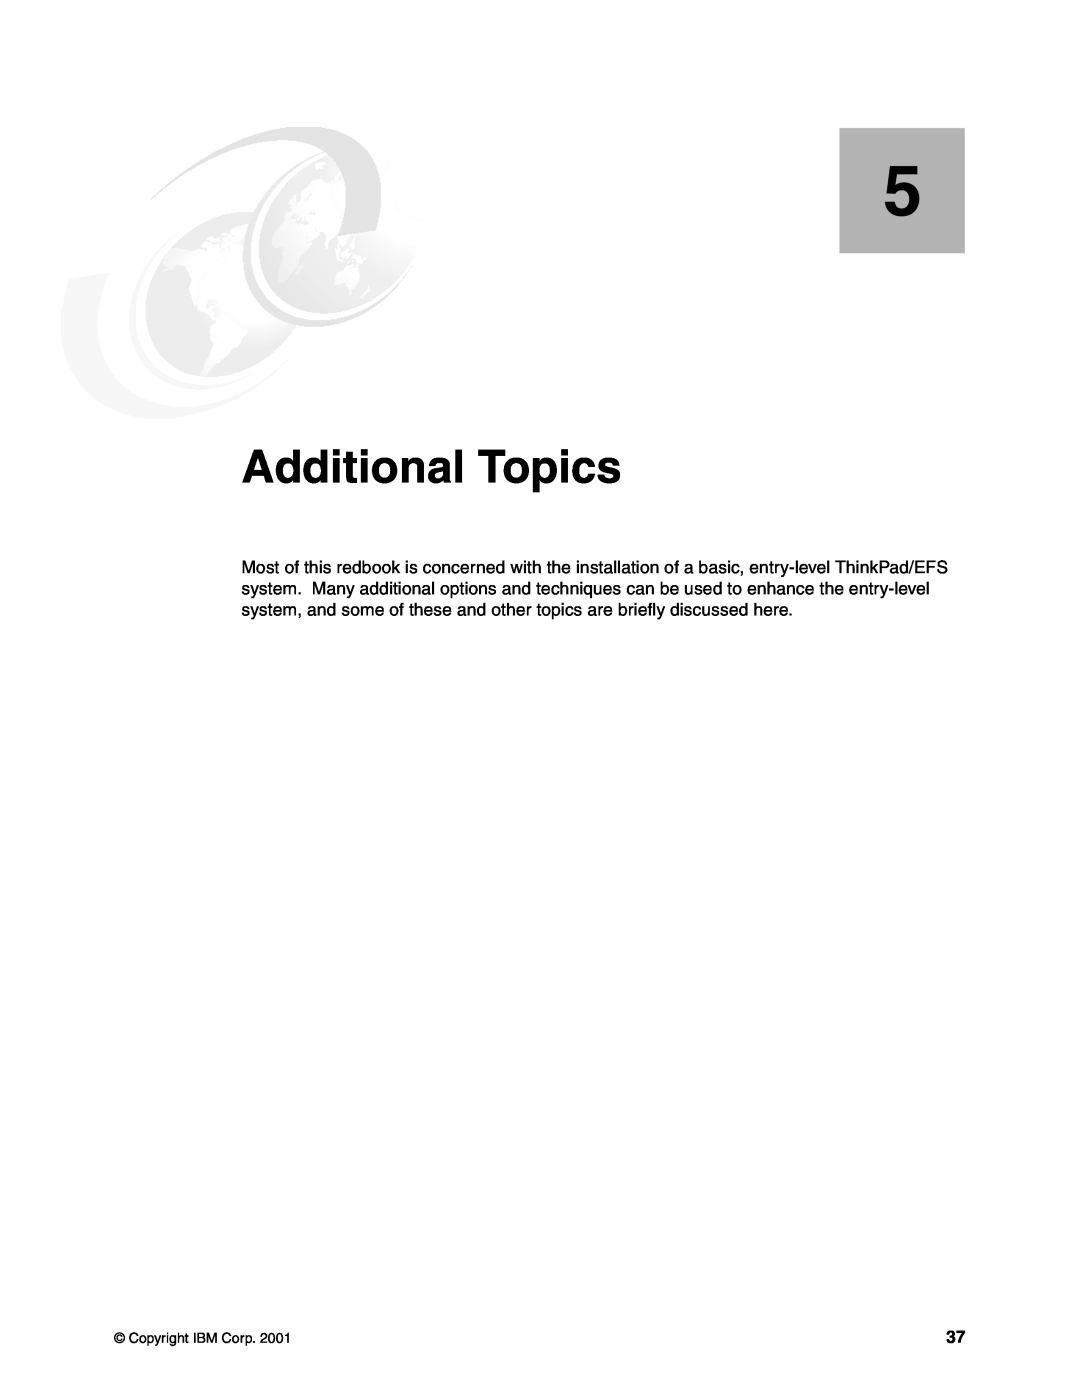 IBM s/390 manual Additional Topics, Copyright IBM Corp 